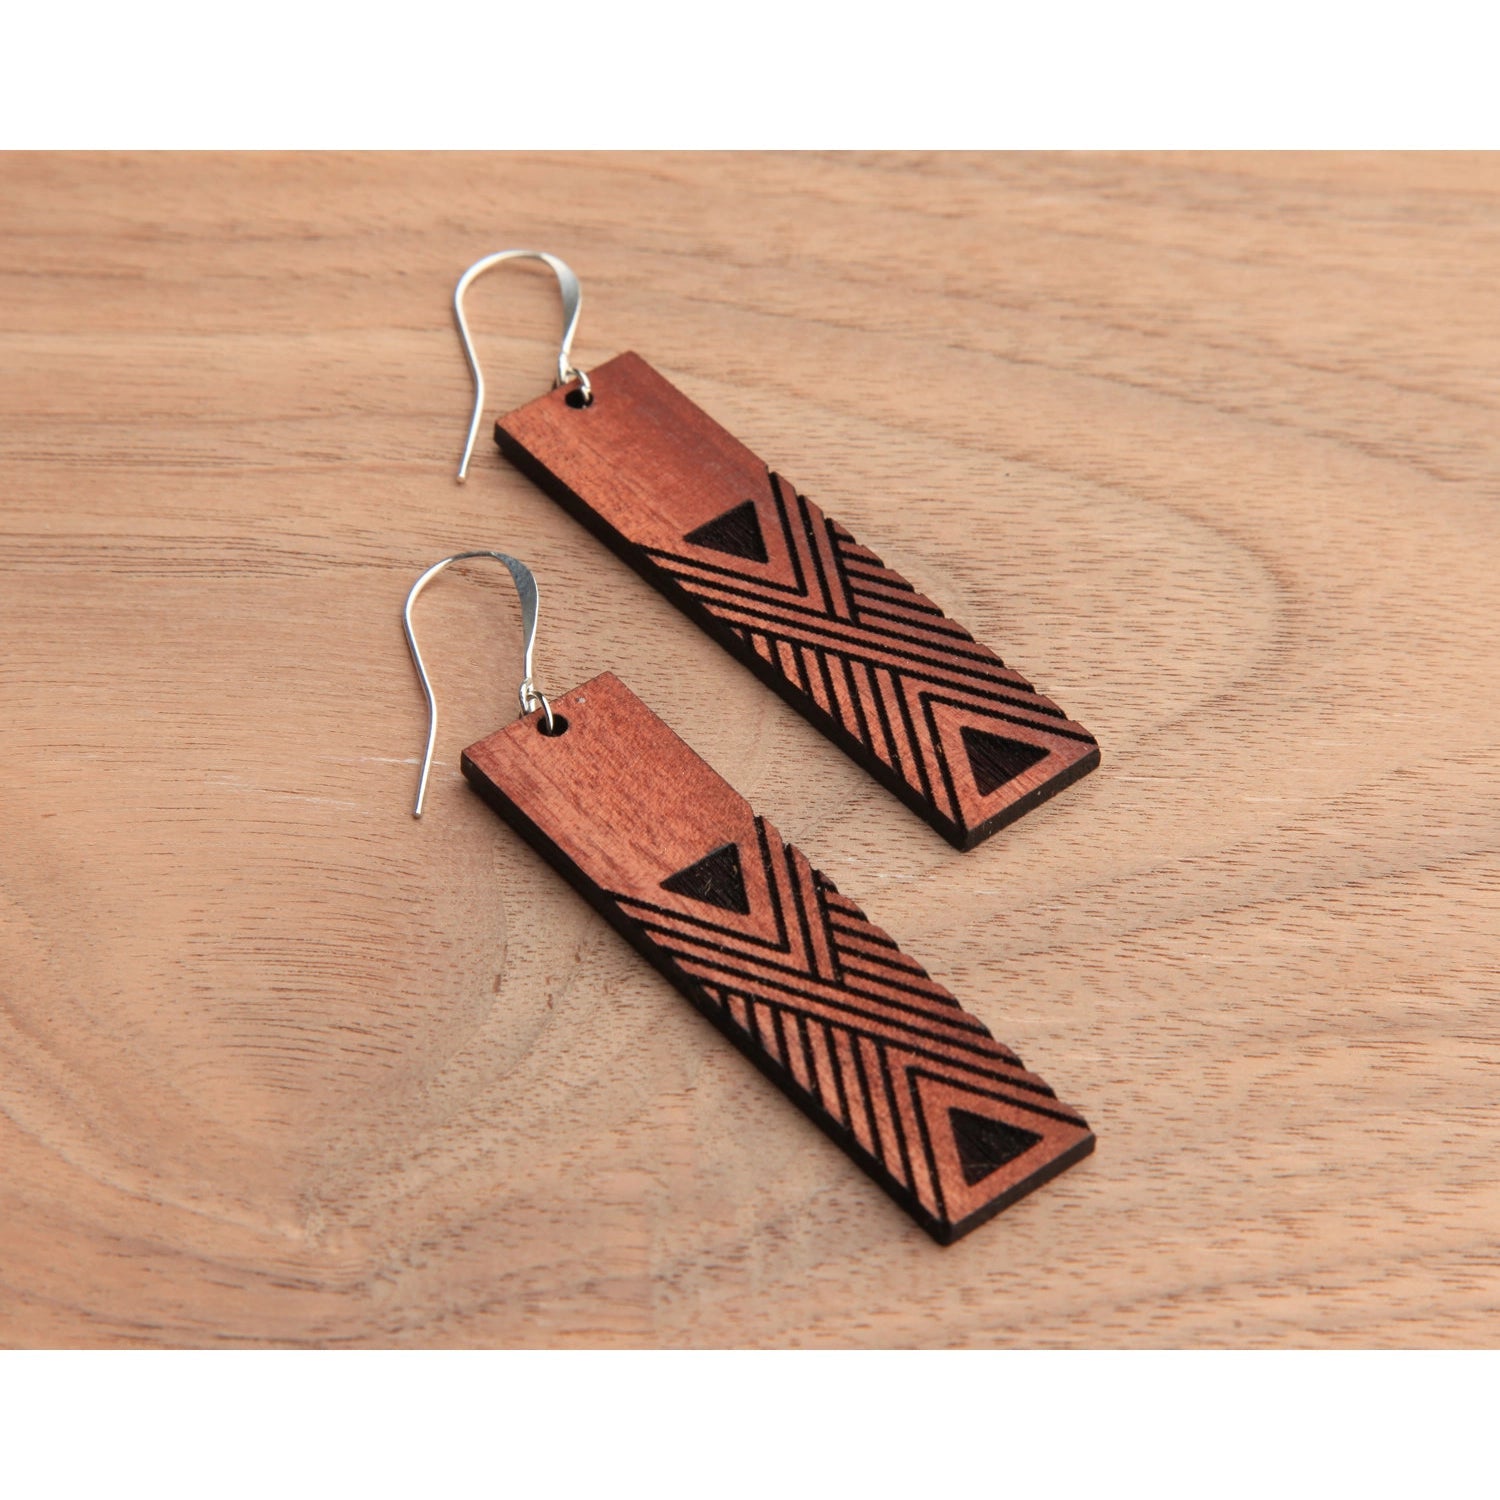 Handmade Wooden Earrings - "Hiwi" - Cultural Seeds